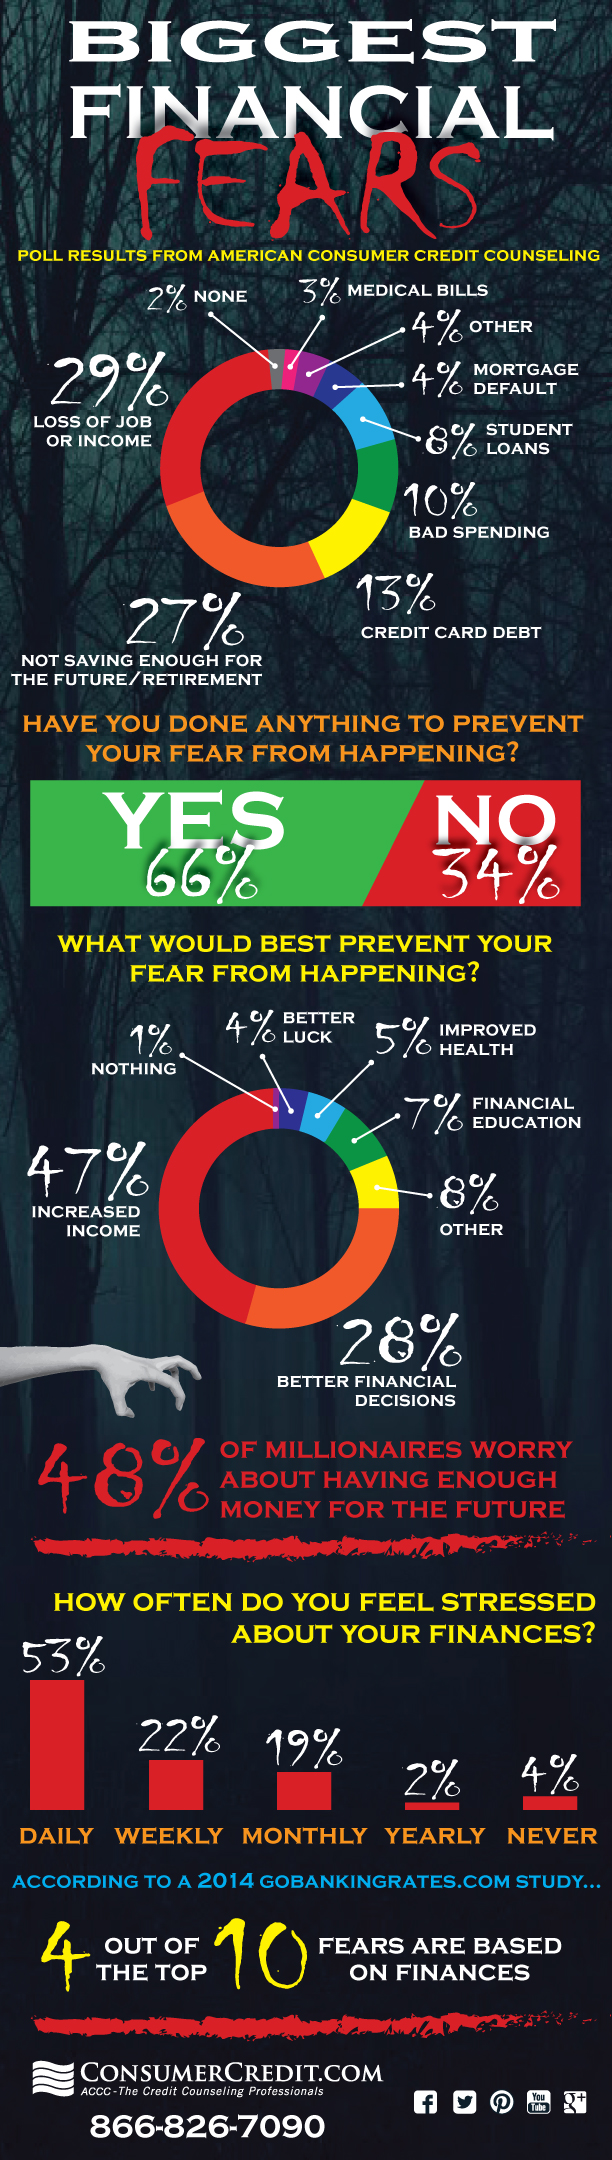 Biggest Financial Fears